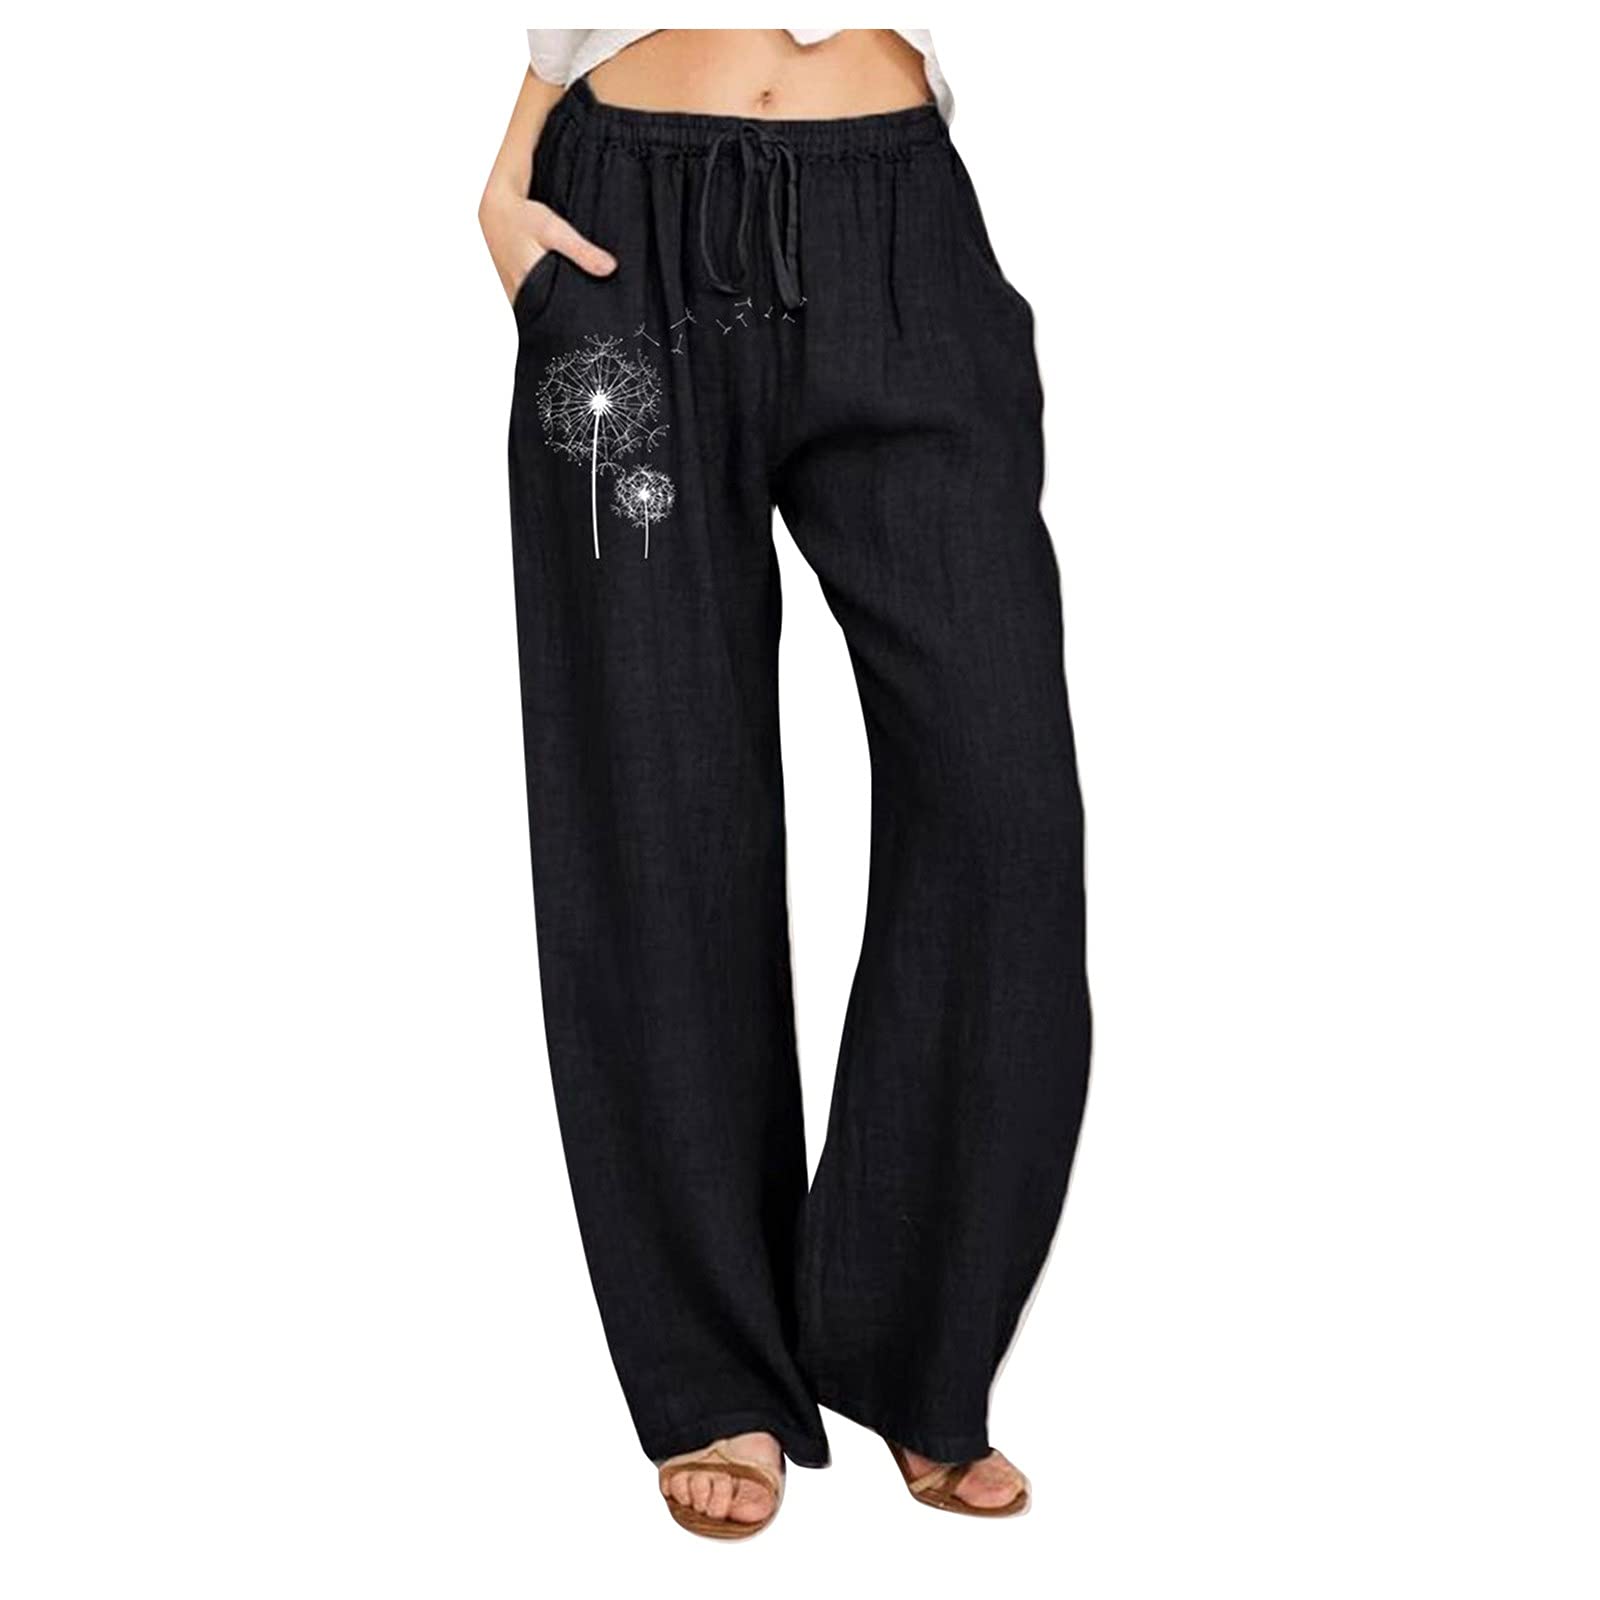 Women's Pants: Jogger Pants, Sweatpants, Beach Pants, Palazzo Pants,  Drawstring Pants, Wide Leg Pants